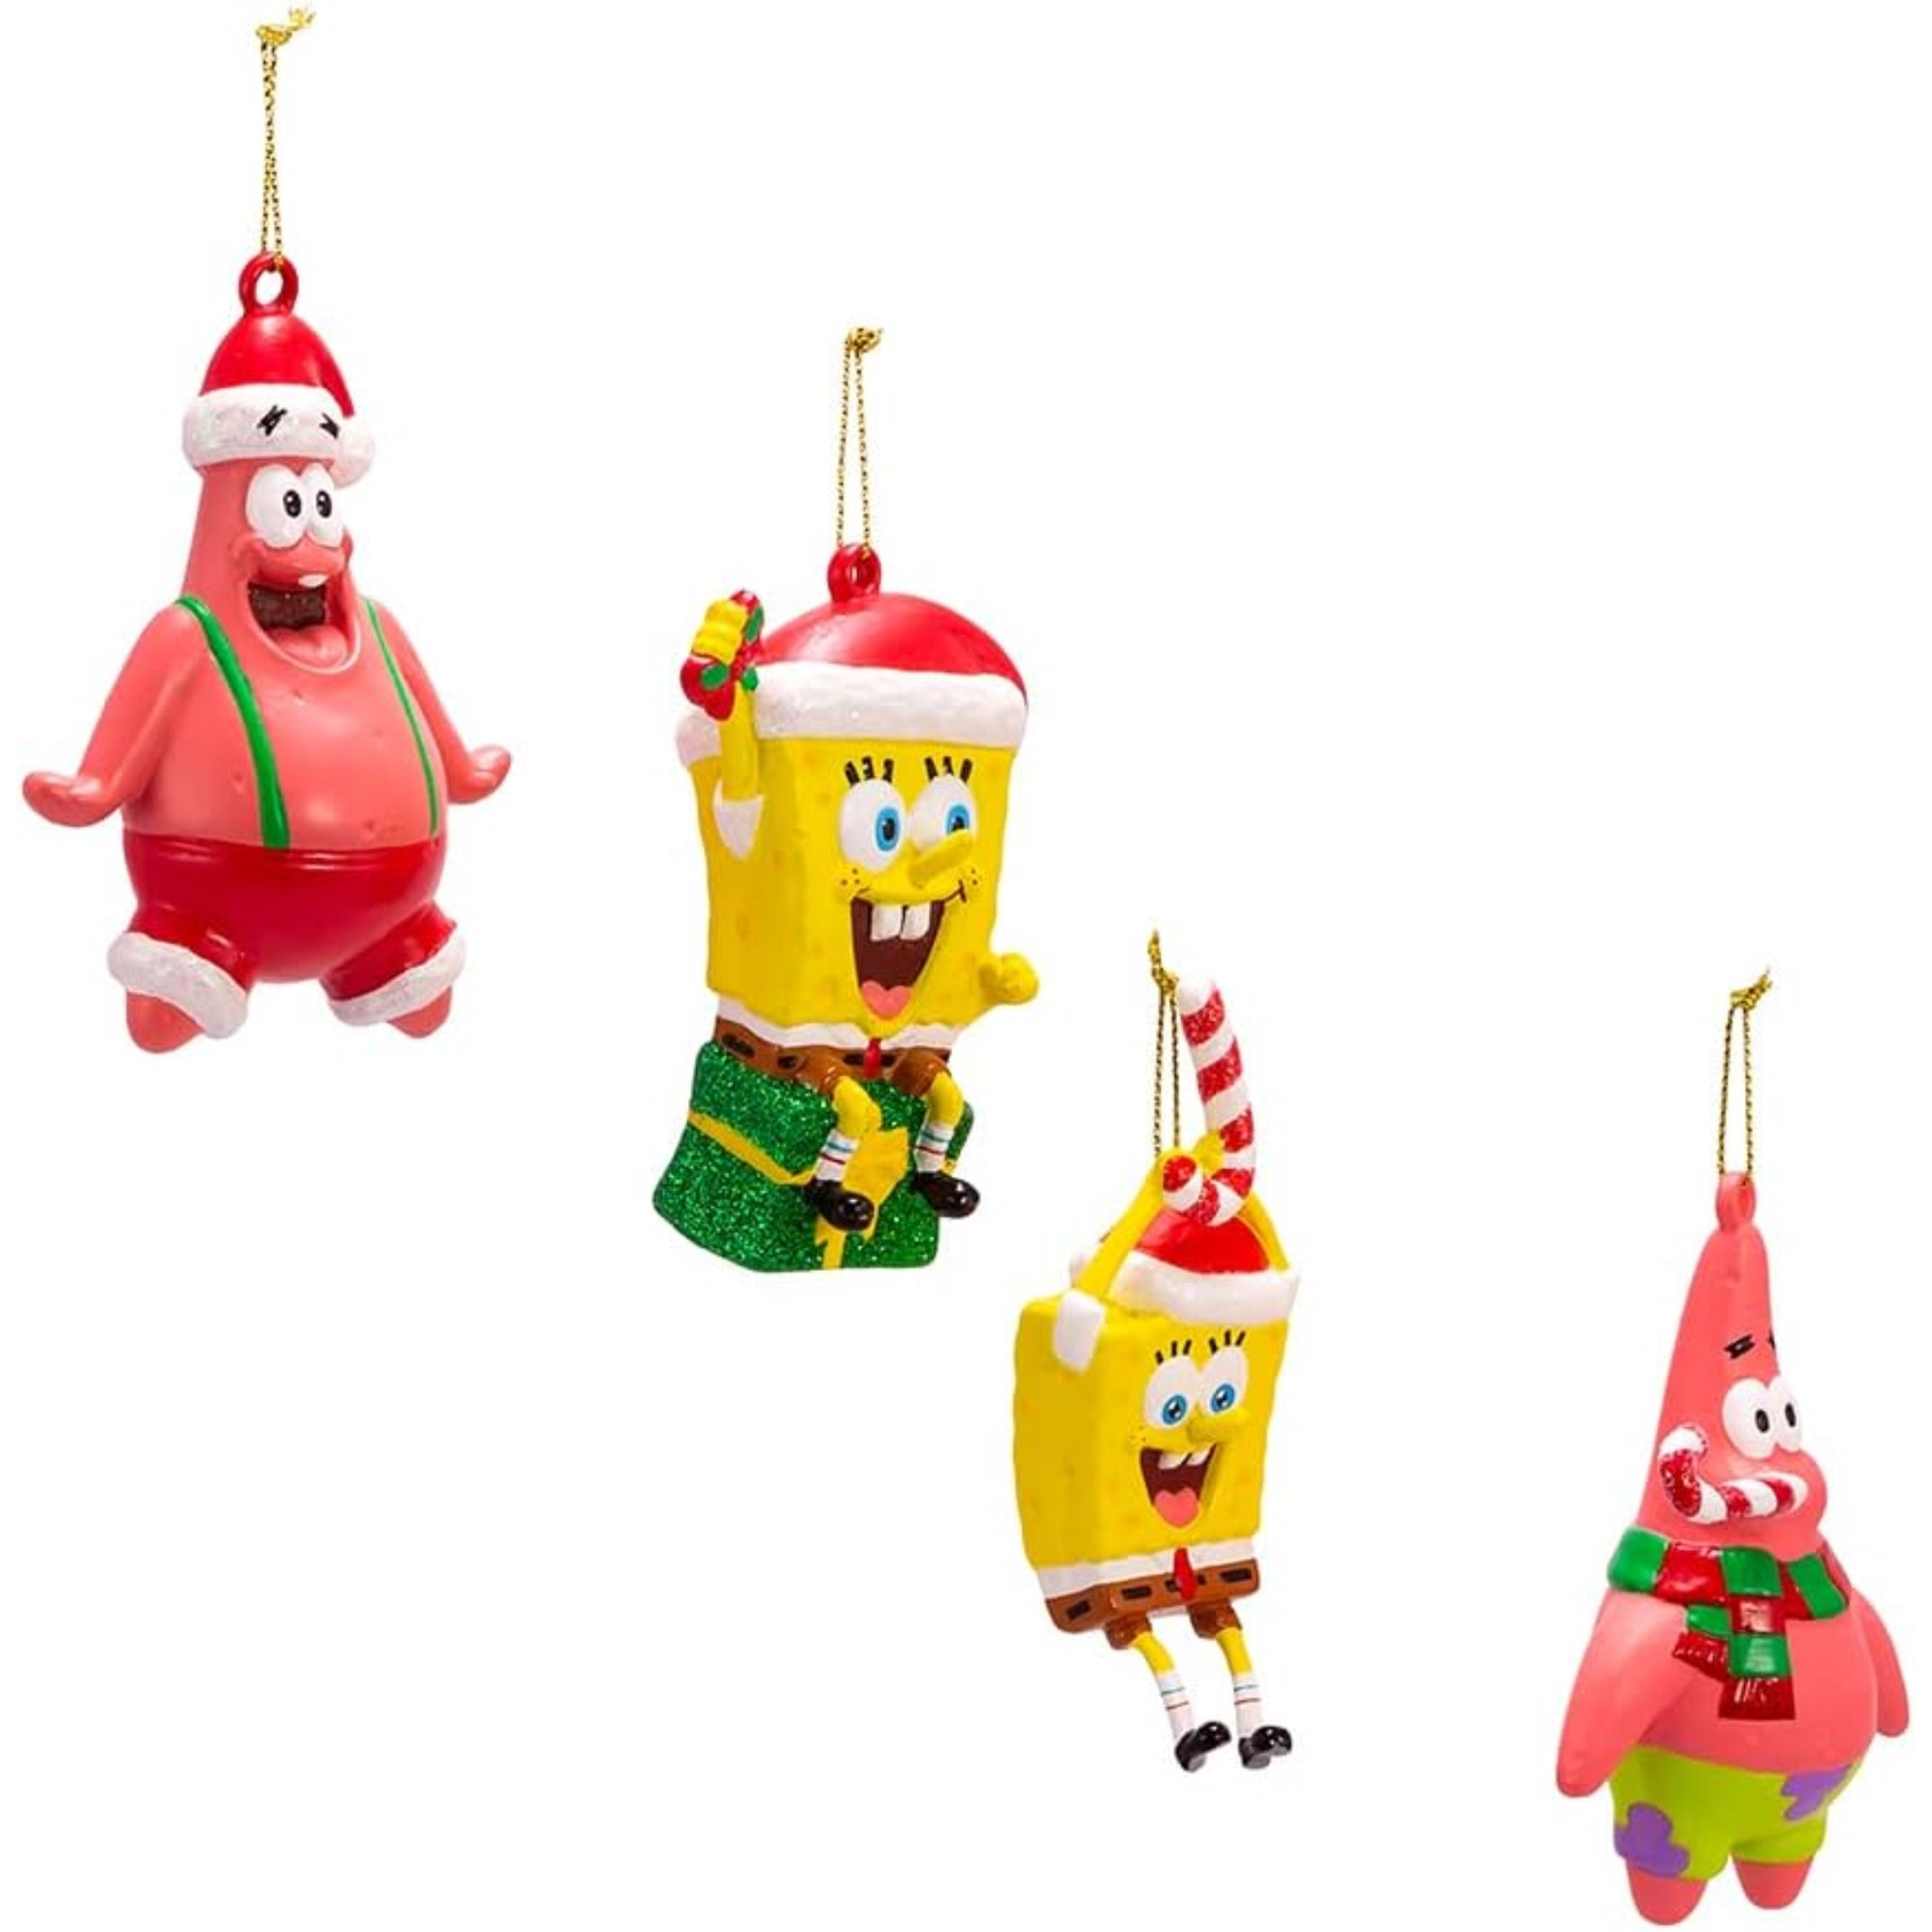 Kurt Adler SpongeBob Squarepants Christmas Ornament Sets, Multi-Colored, 3.5"